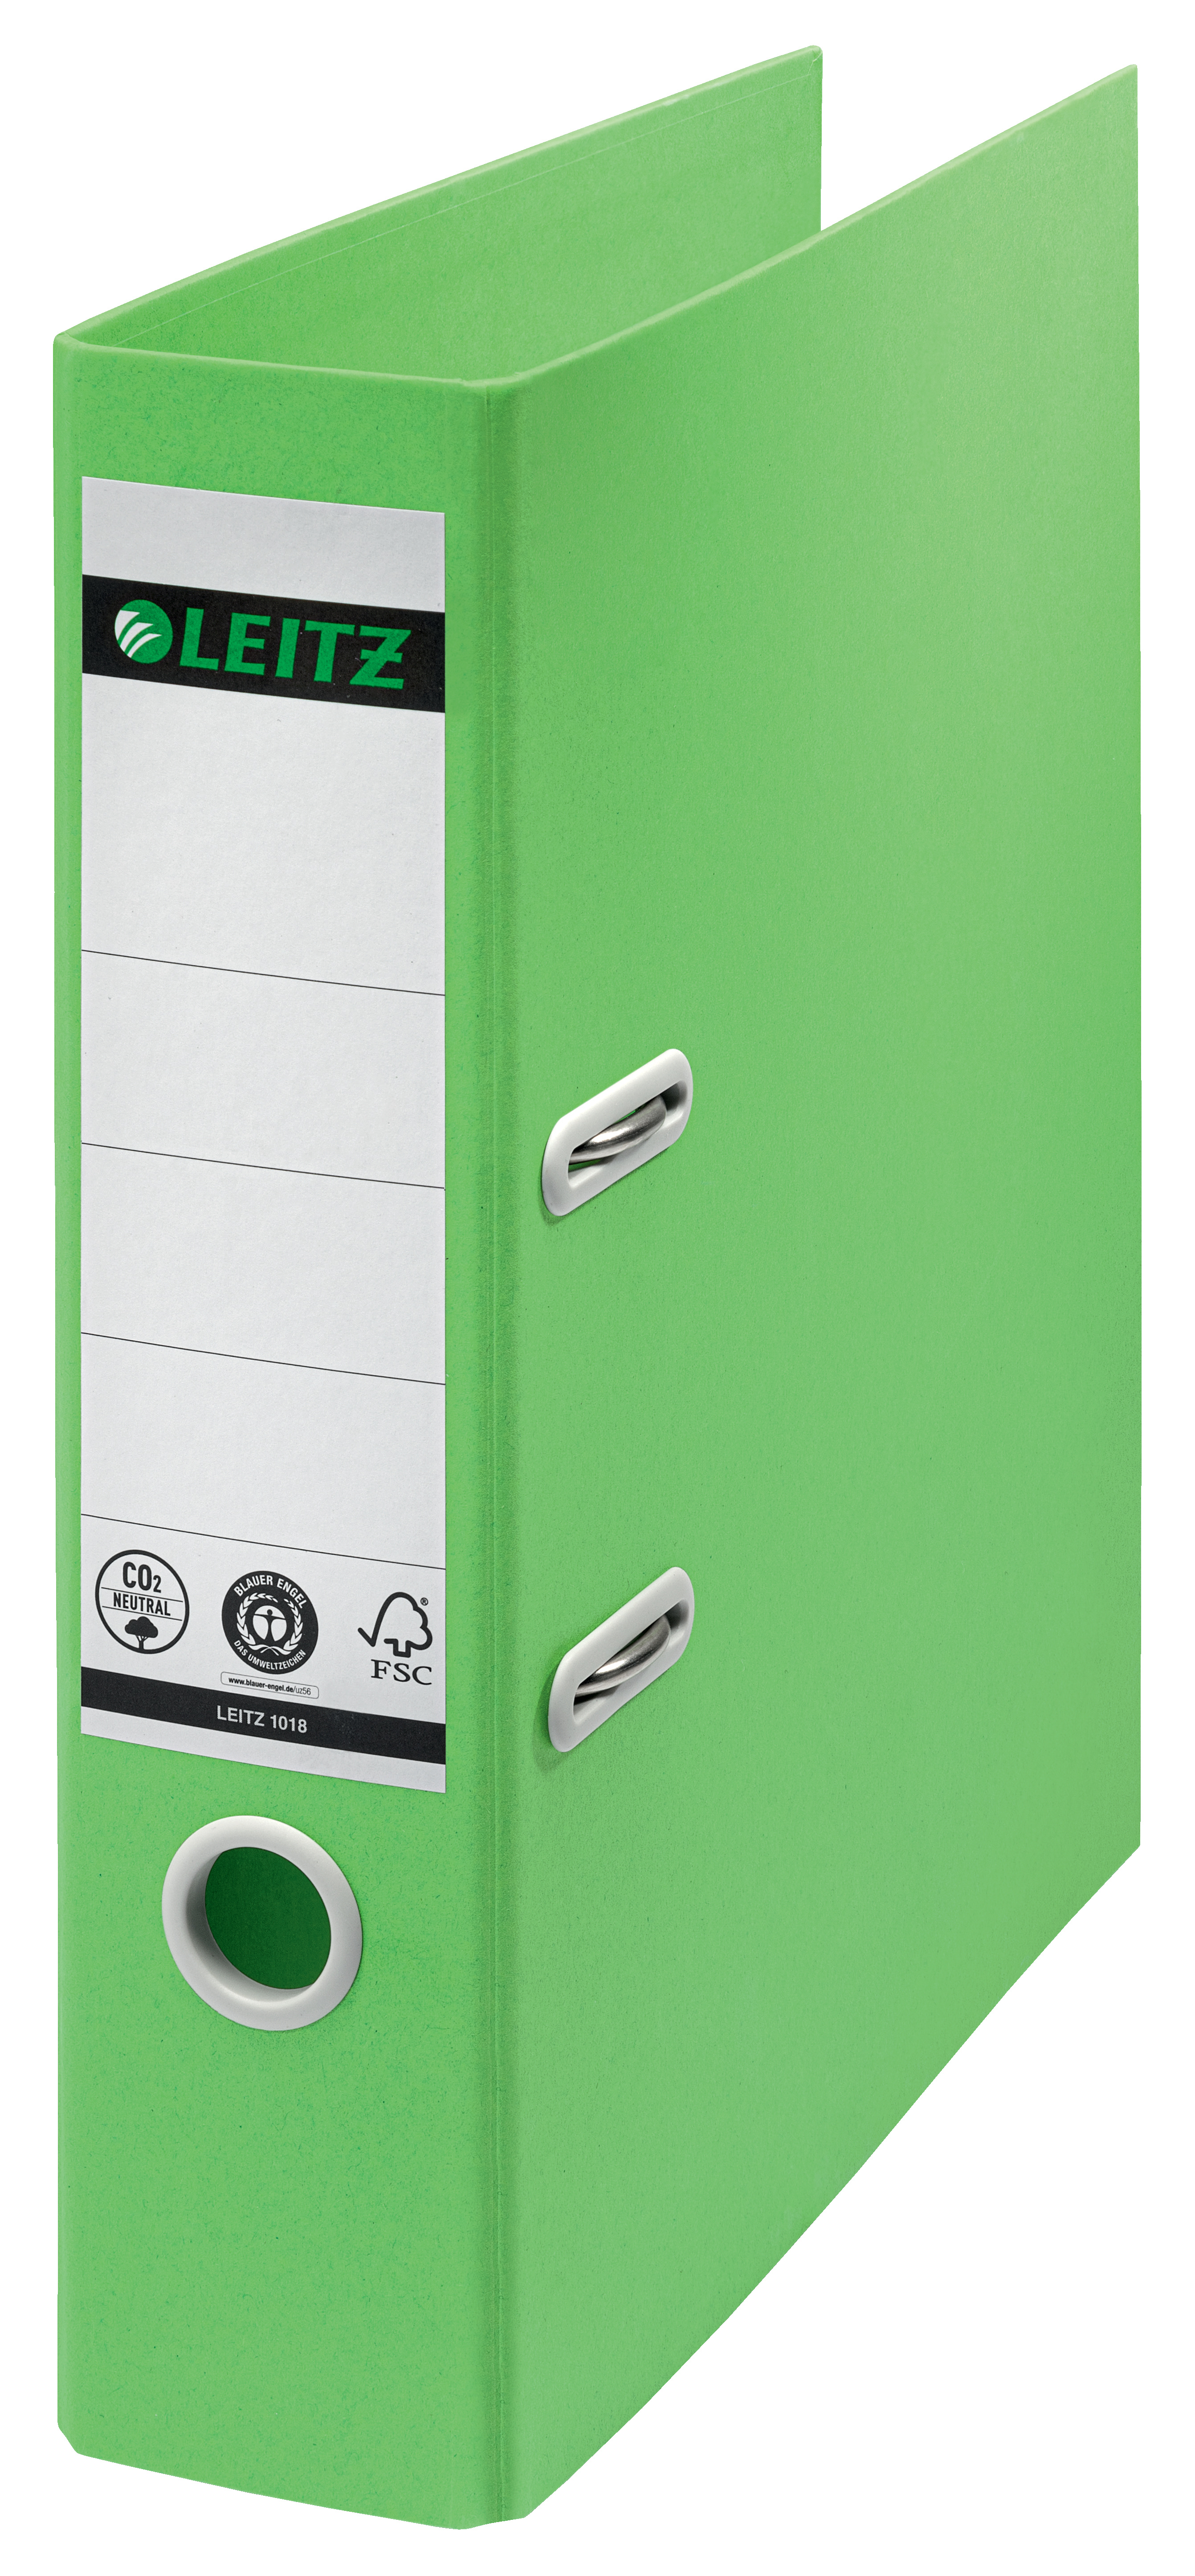 LEITZ Ordner Recycle 8cm 1018-00-55 grün A4